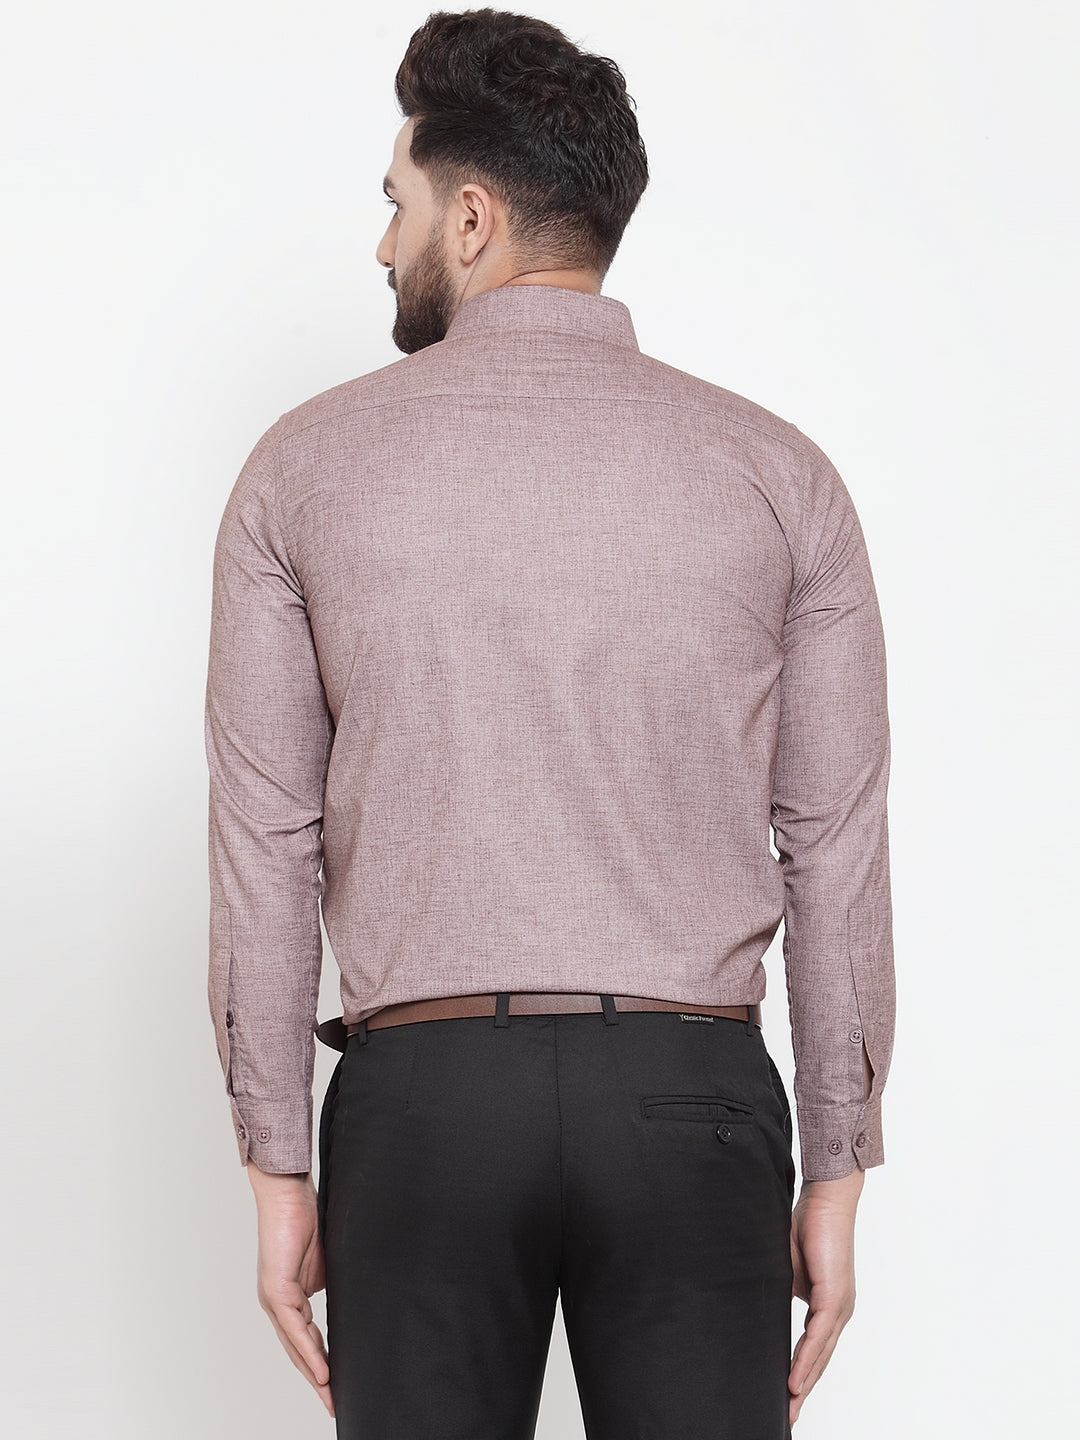 Jainish Brown Men's Cotton Solid Button Down Formal Shirts